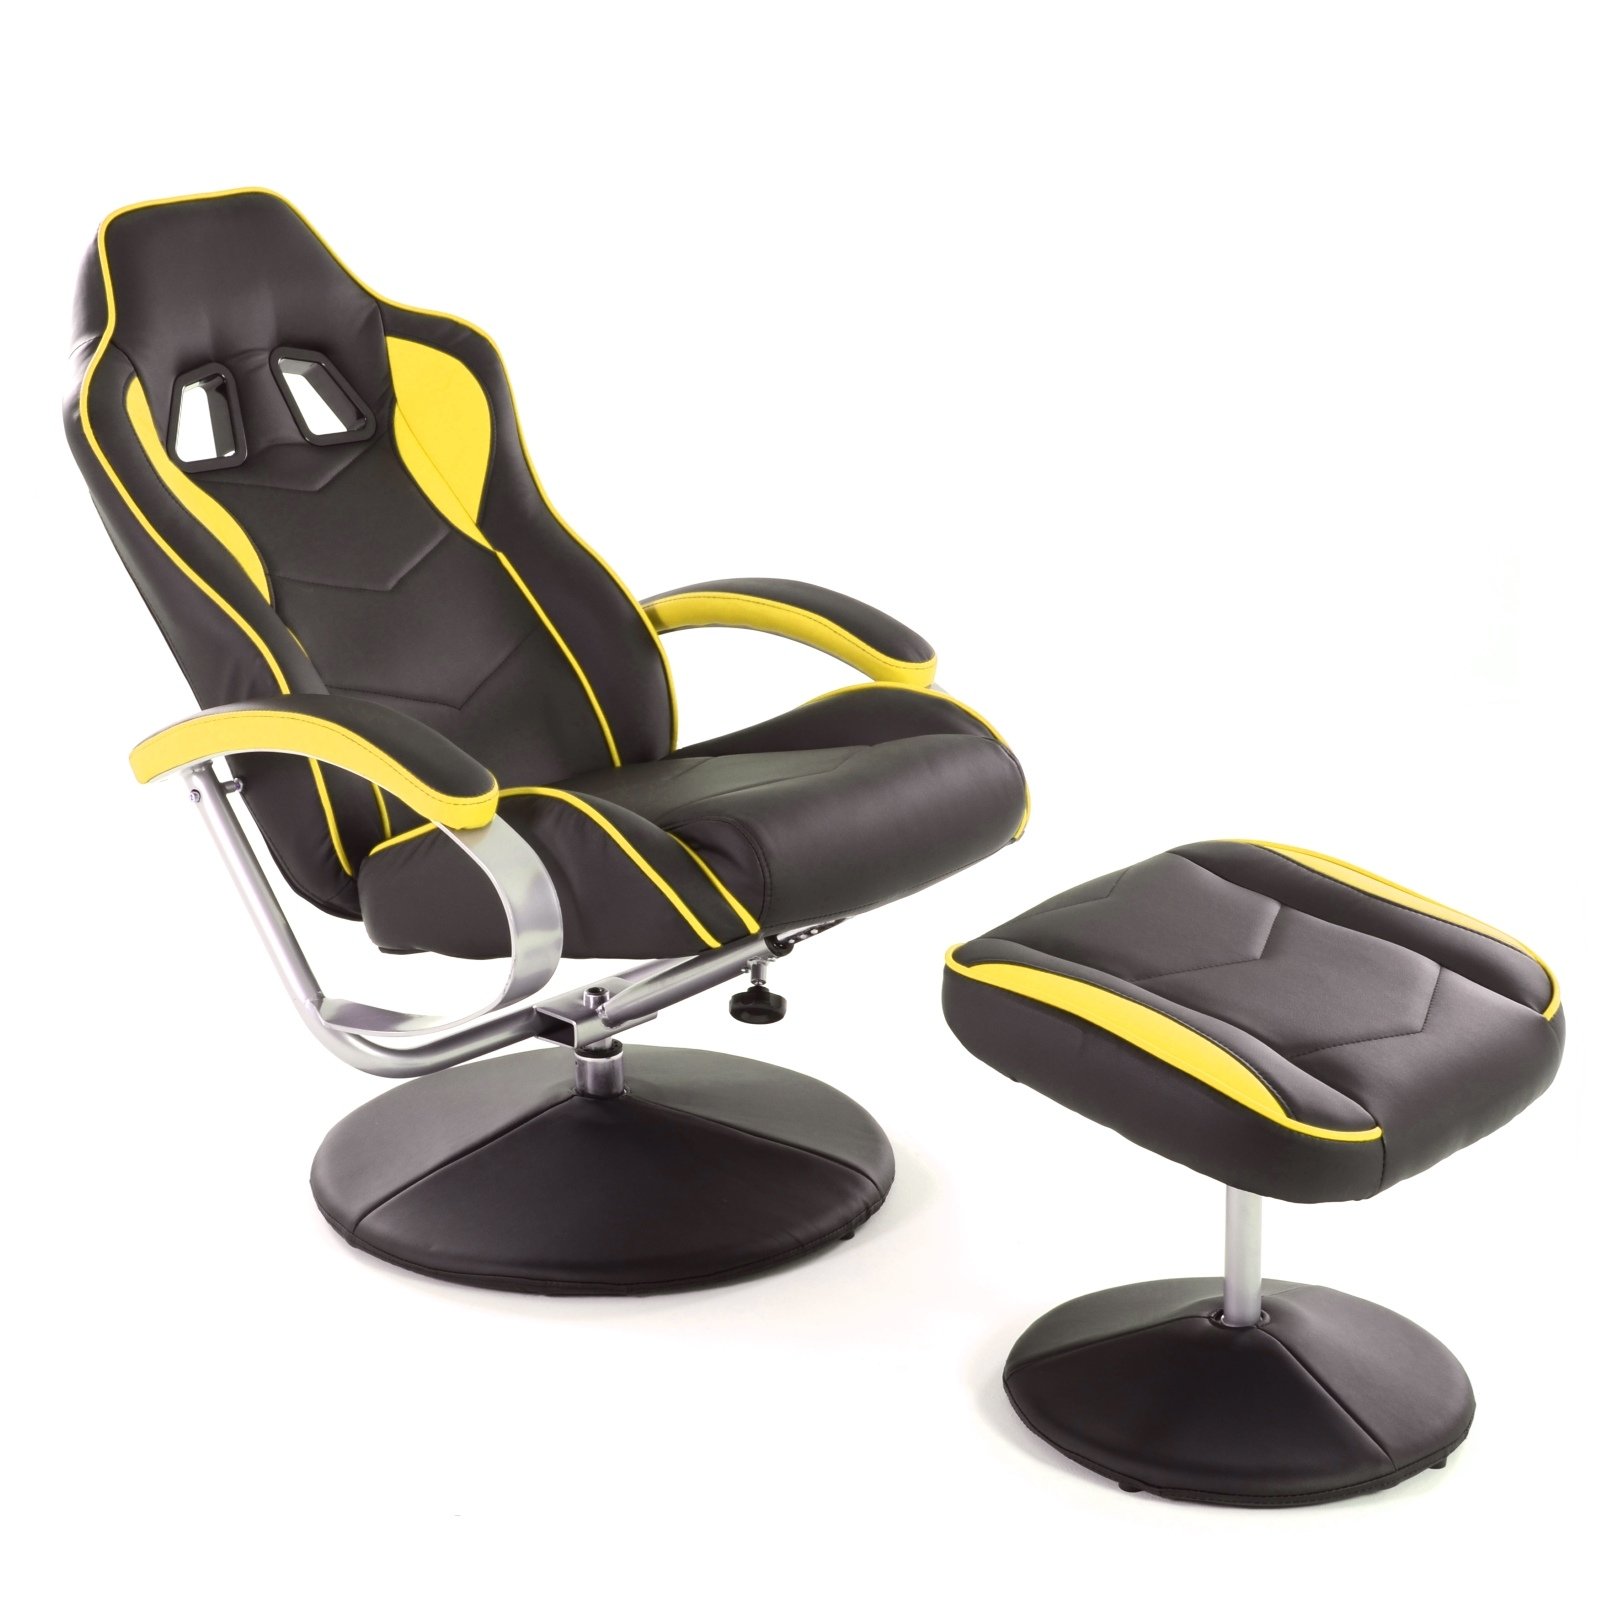 Raburg Gaming-Sessel DRIFT Sport, SCHWARZ-GELB mit Hocker, Soft-Touch-Kunstleder, ergonomisch, Racing-Design, Bürostuhl, Streamingstuhl, Chefsessel, Relaxfunktion, 135° neigbar, 360°, bis 120 kg